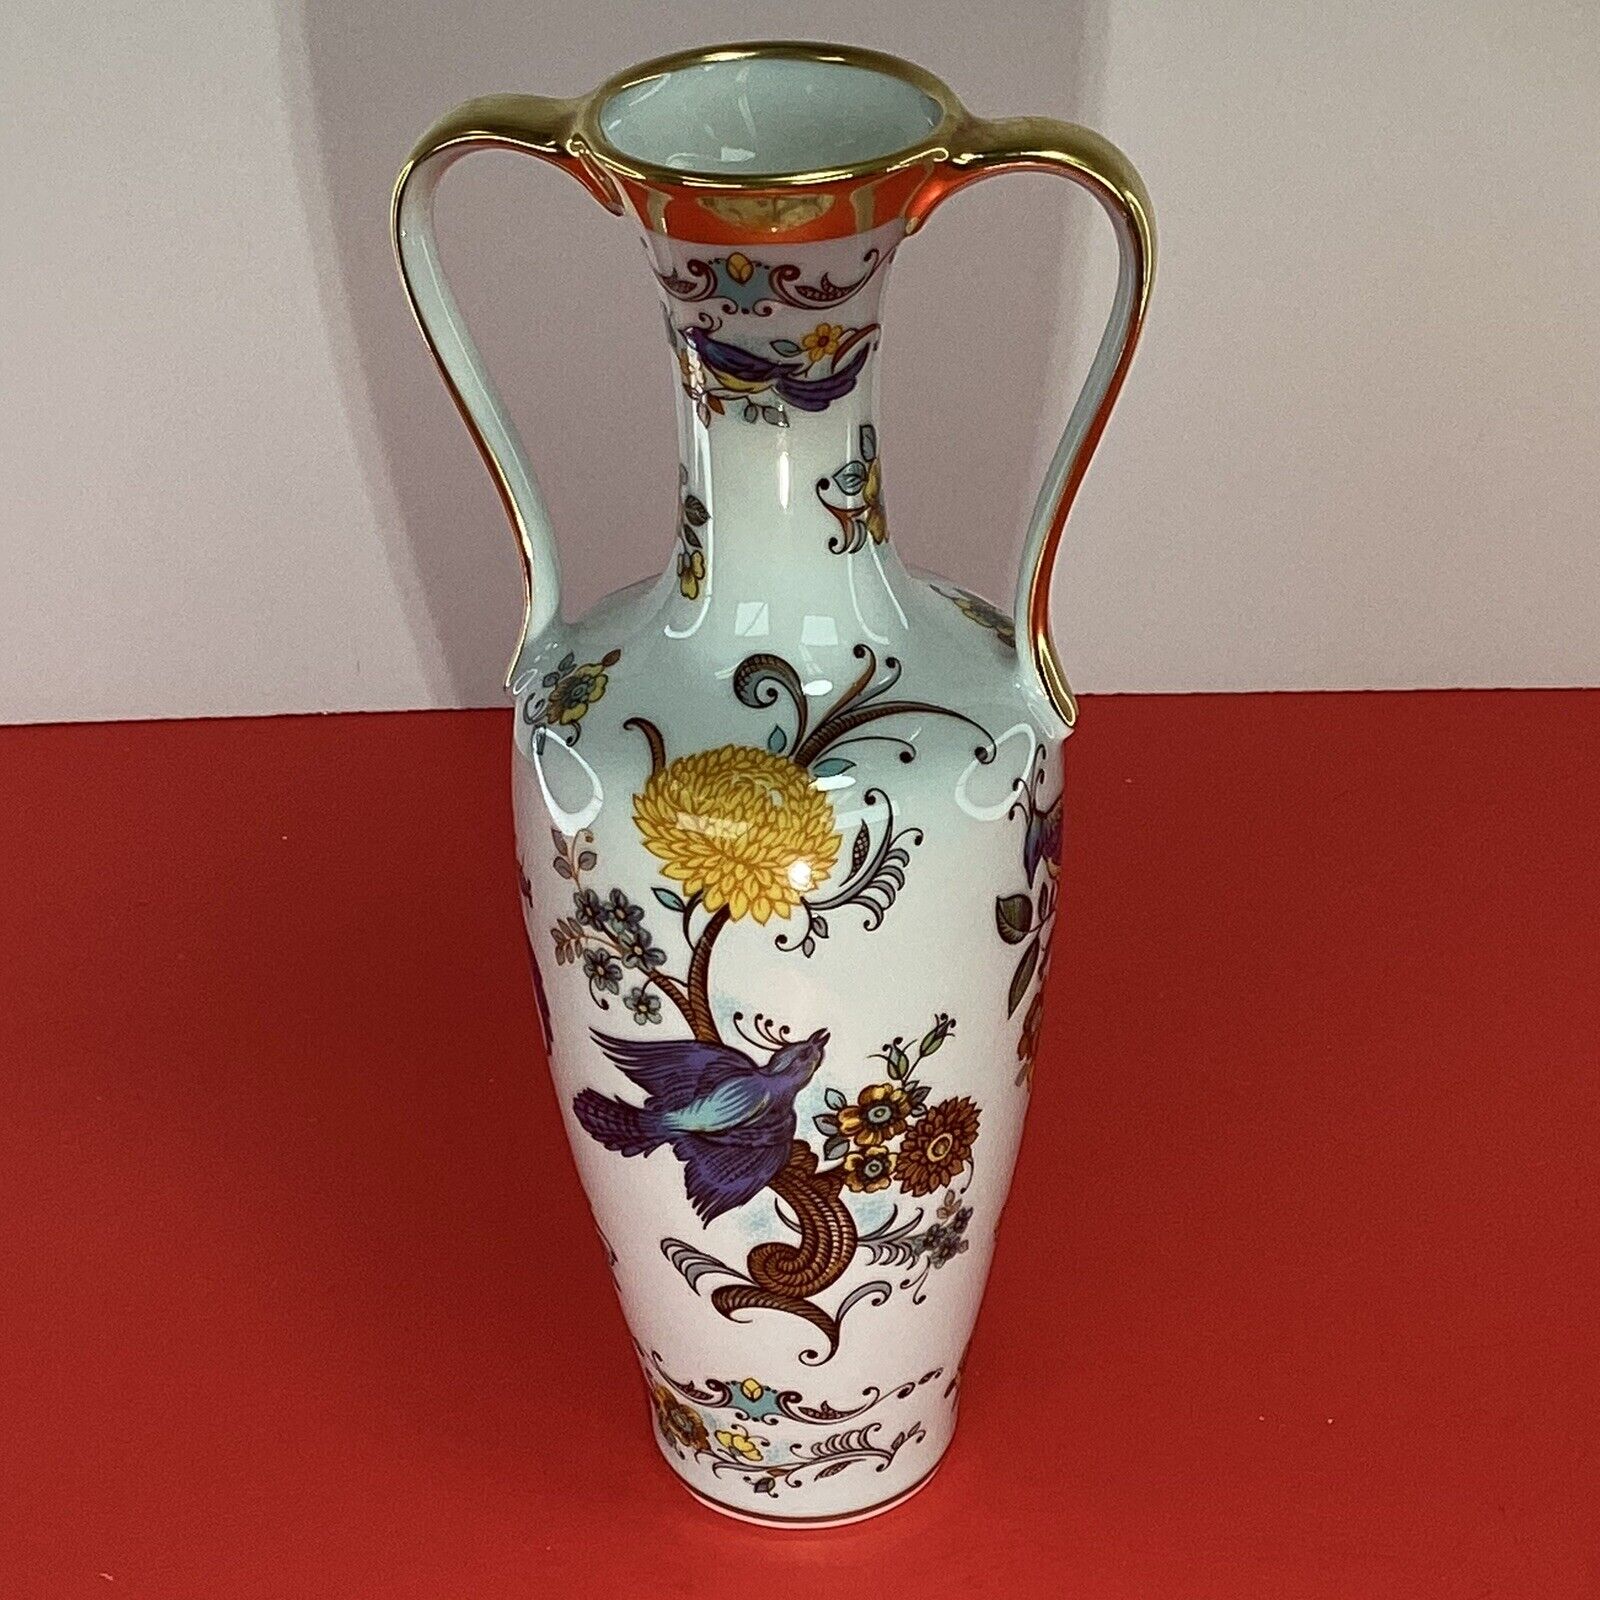 royal porzellan bavaria kpm germany Floral vase handcrafted gold tone accents